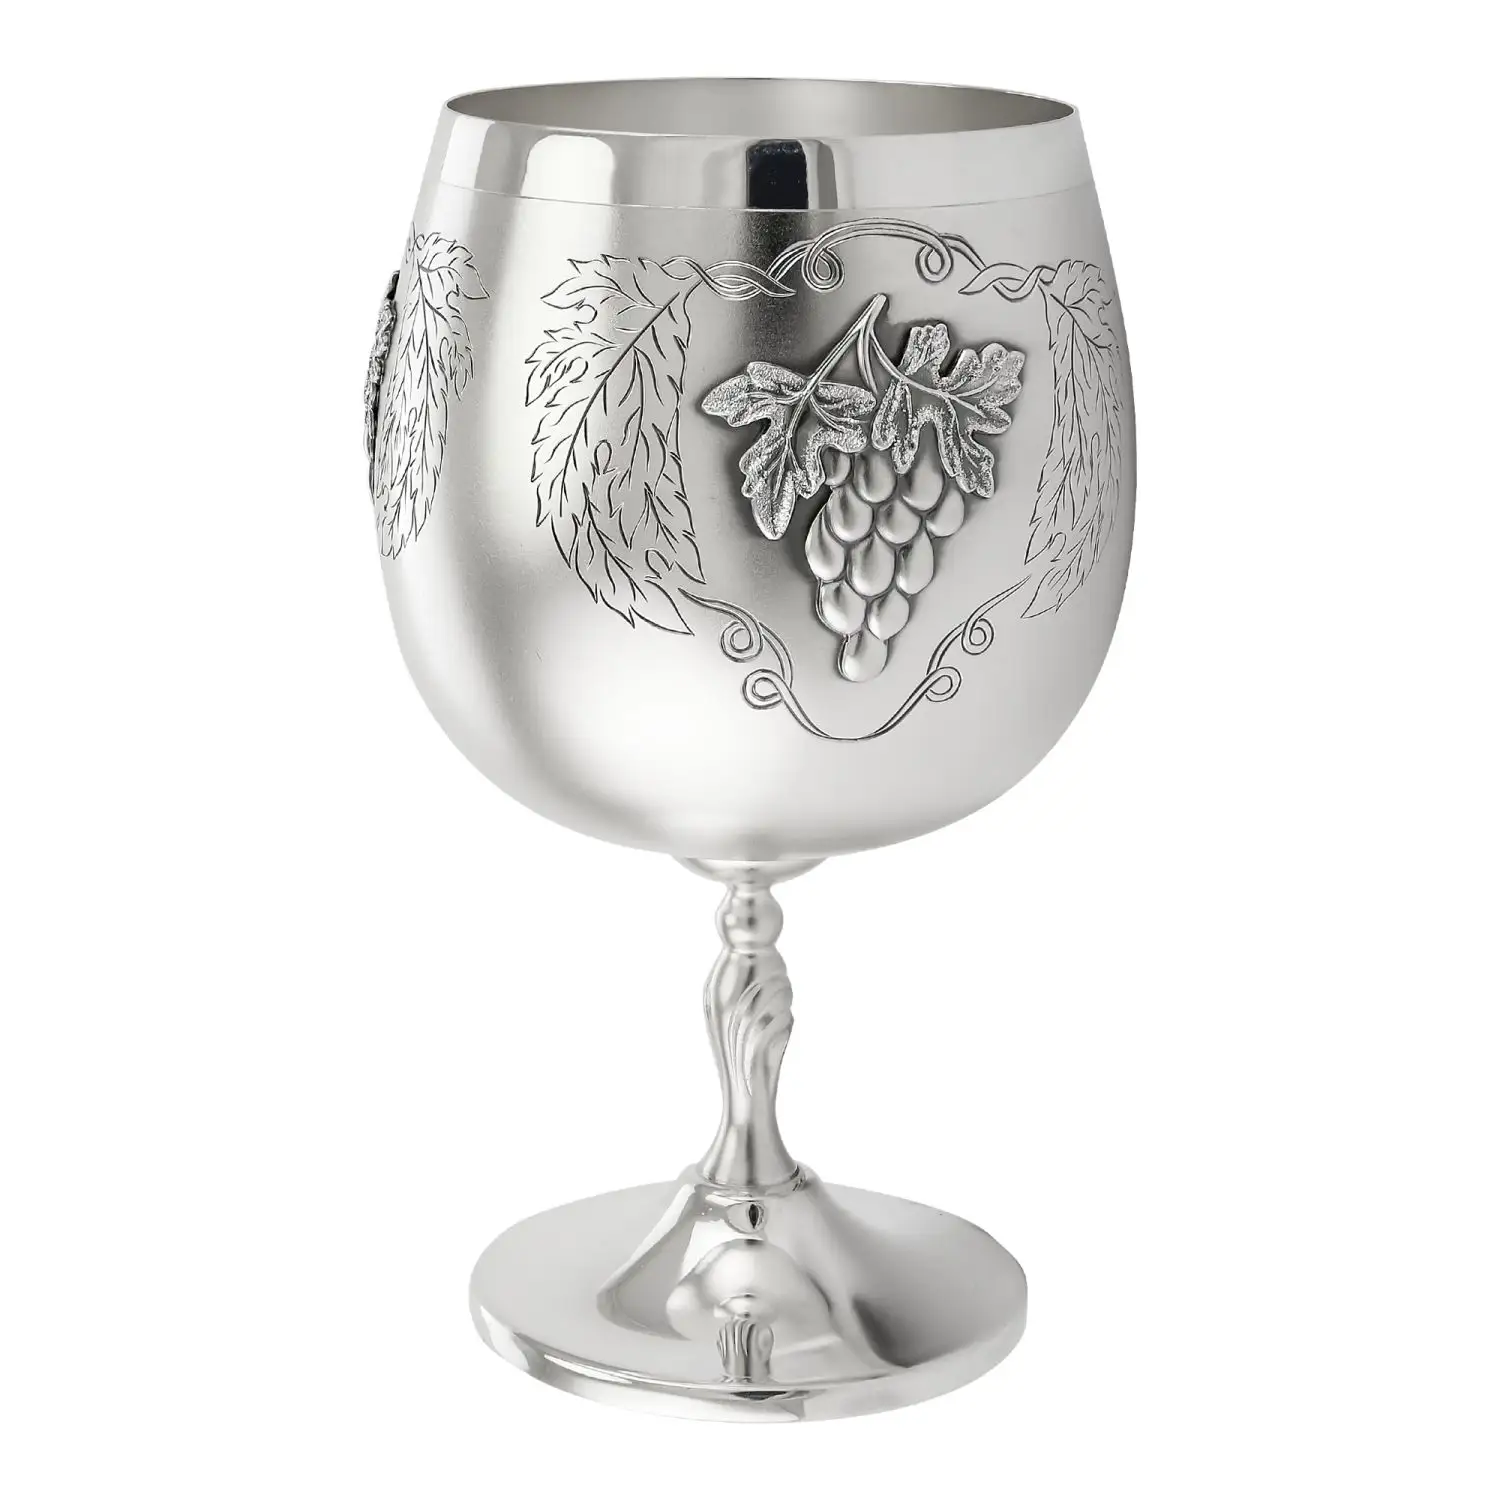 Бокал для коньяка Виноградная лоза (Серебро 925) бокал для коньяка виноградная лоза серебро 925